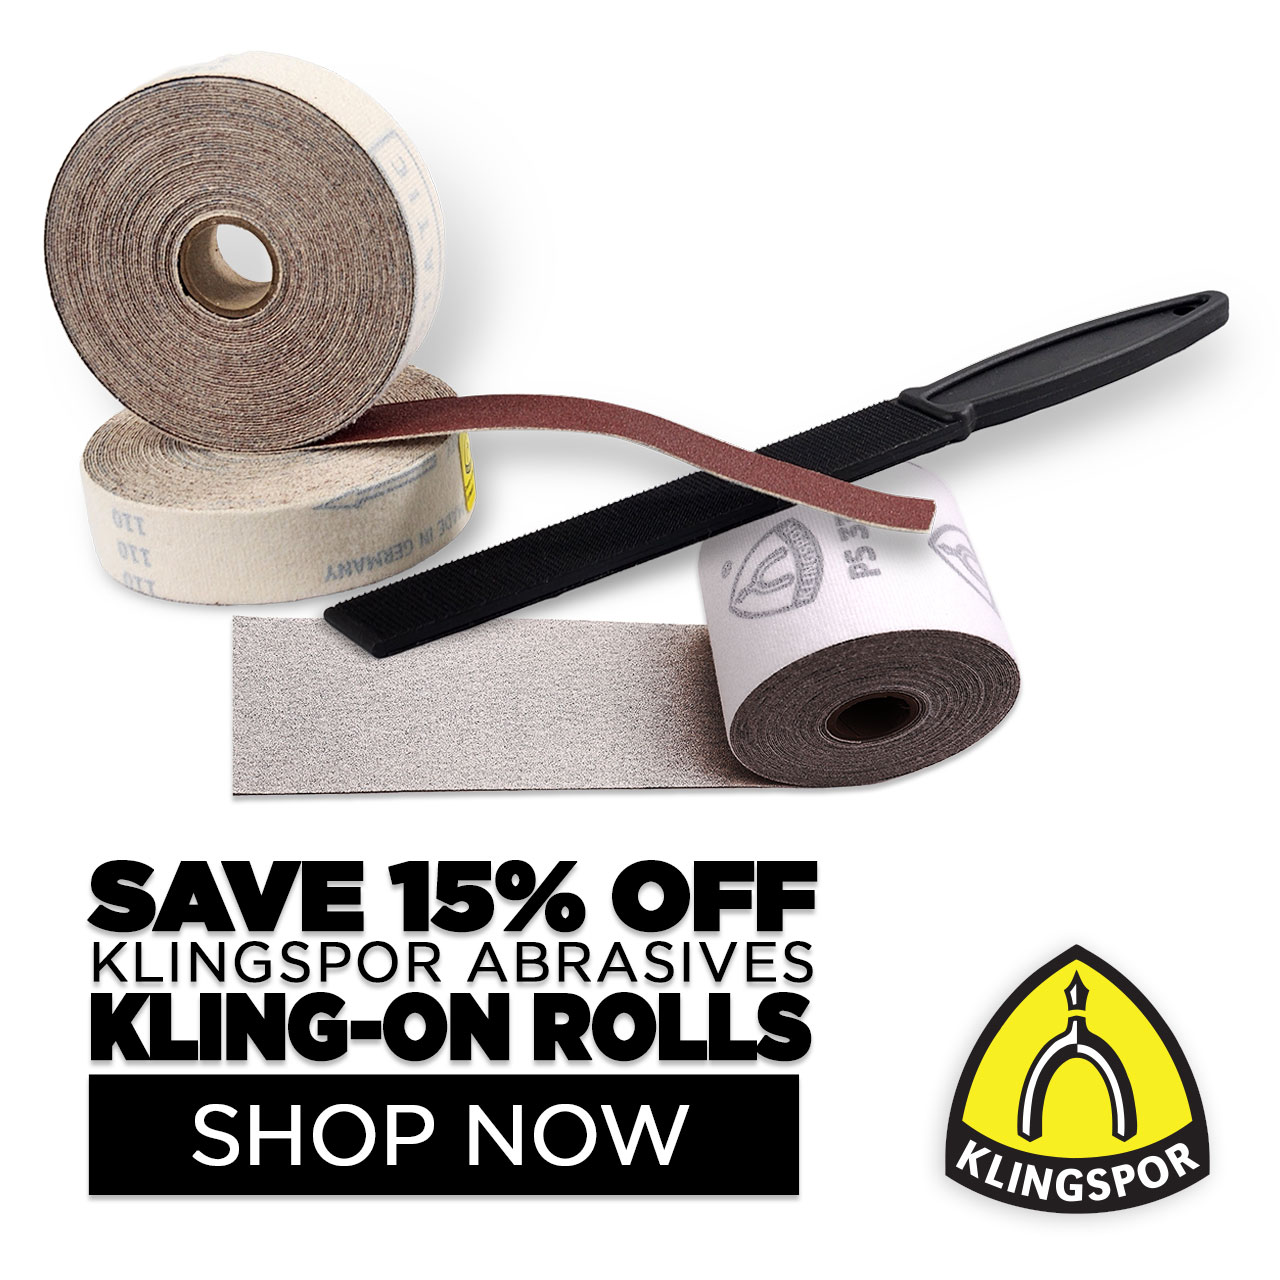 Save 15% 0n Klingspor Abrasives Kling-On Rolls